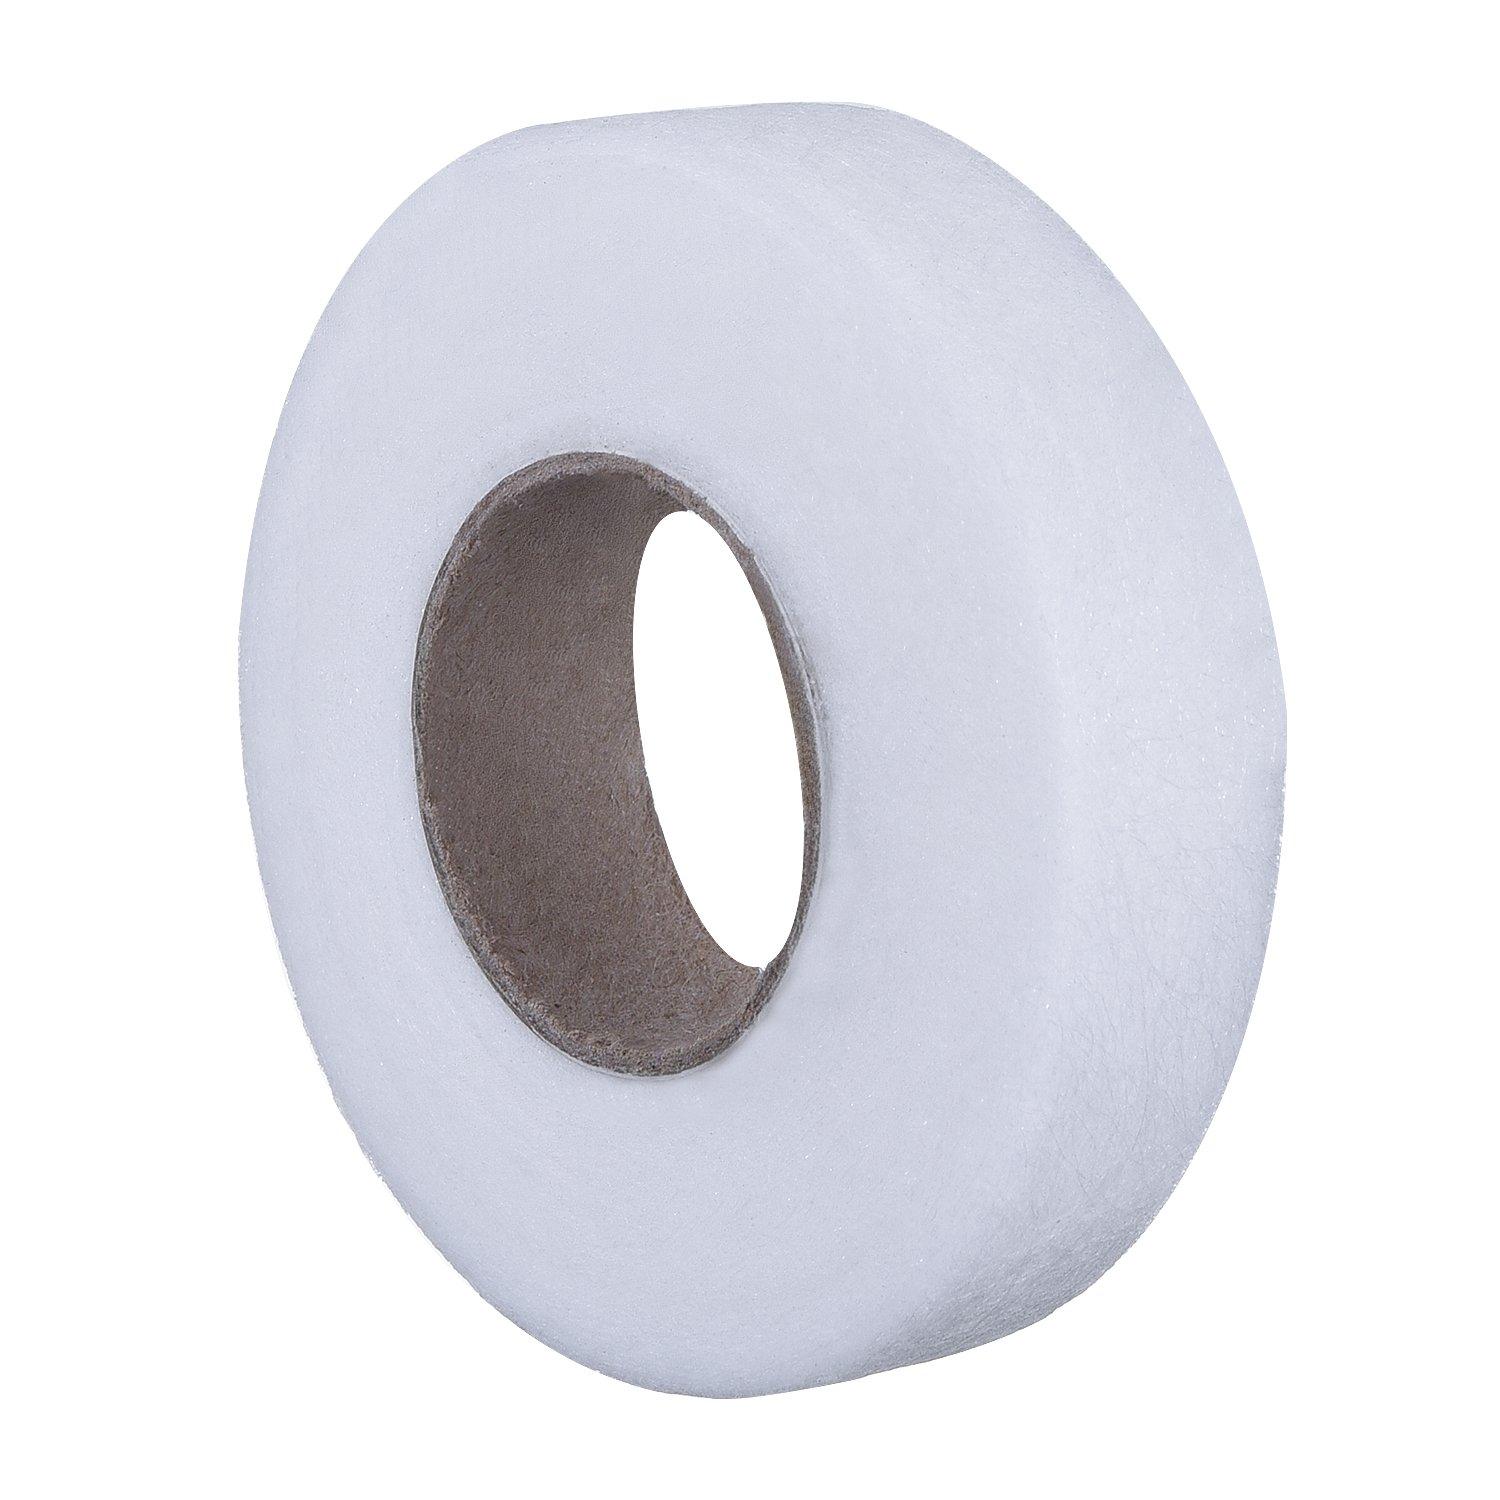  Outus 2 Rolls Fabric Fusing Tape Adhesive Hem Tape